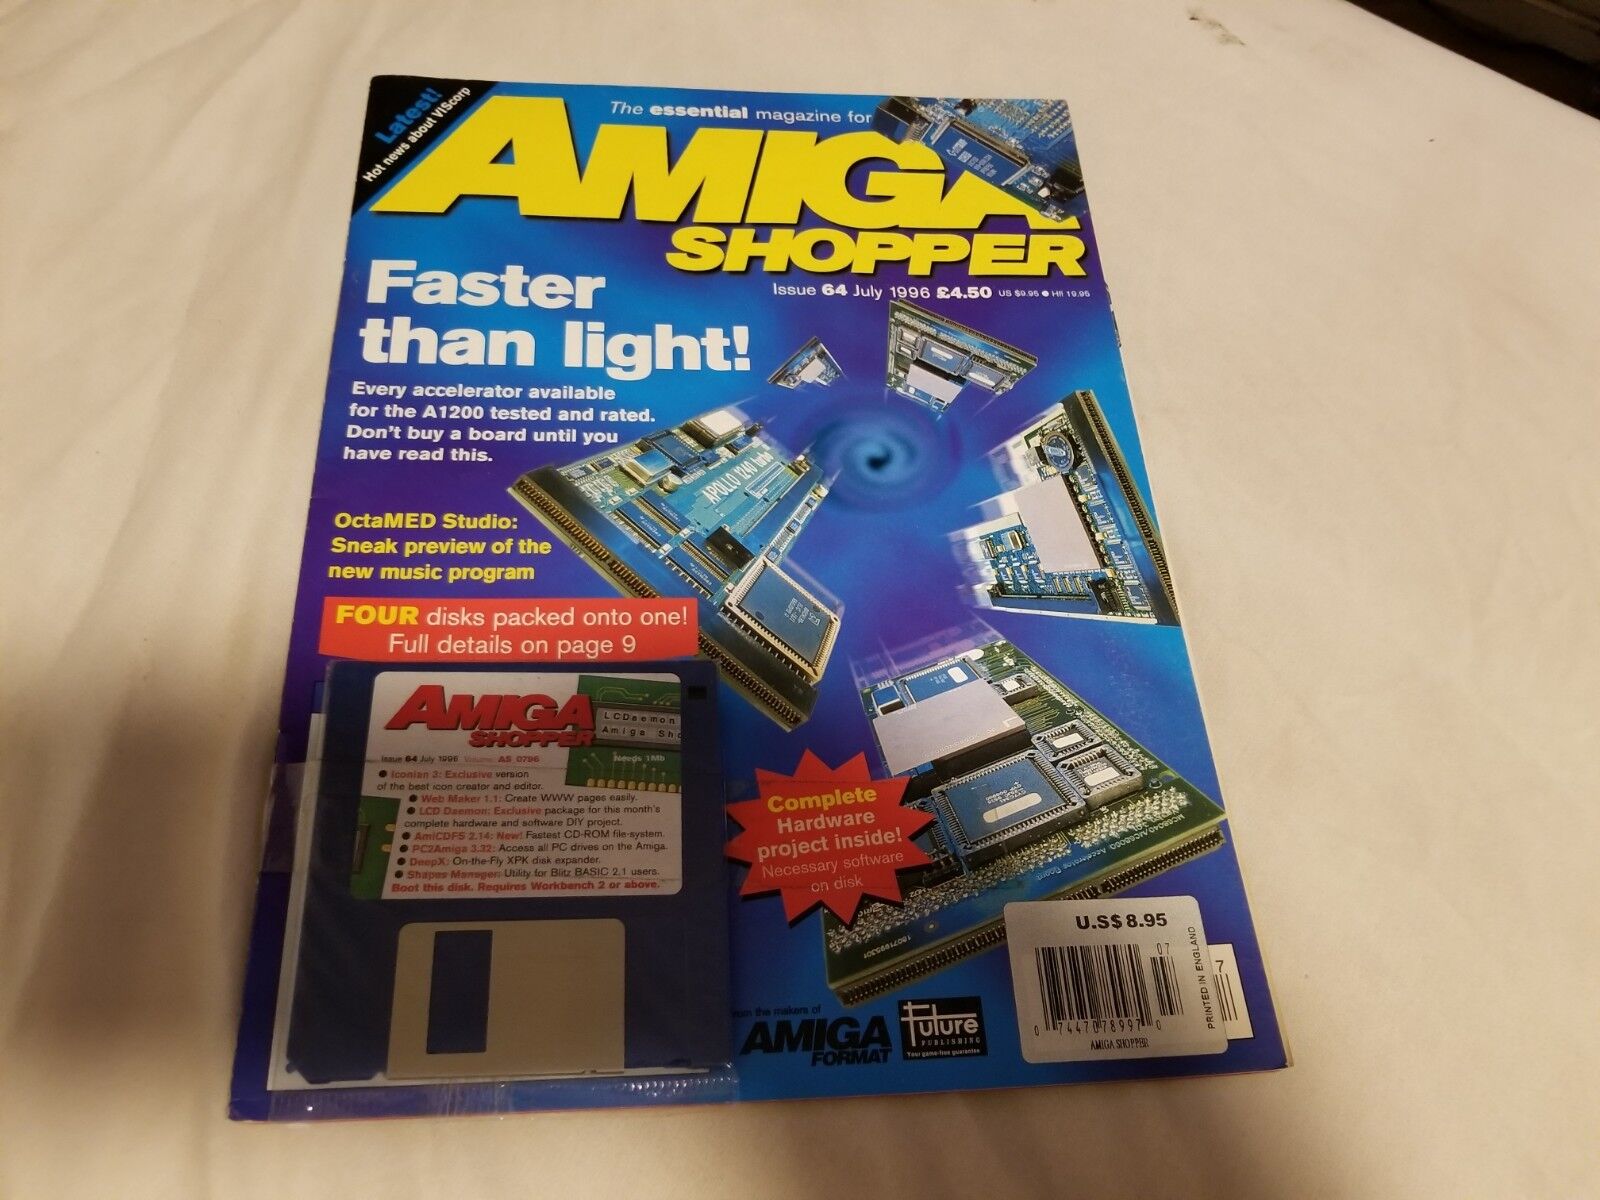 Amiga Shopper Faster Than Light